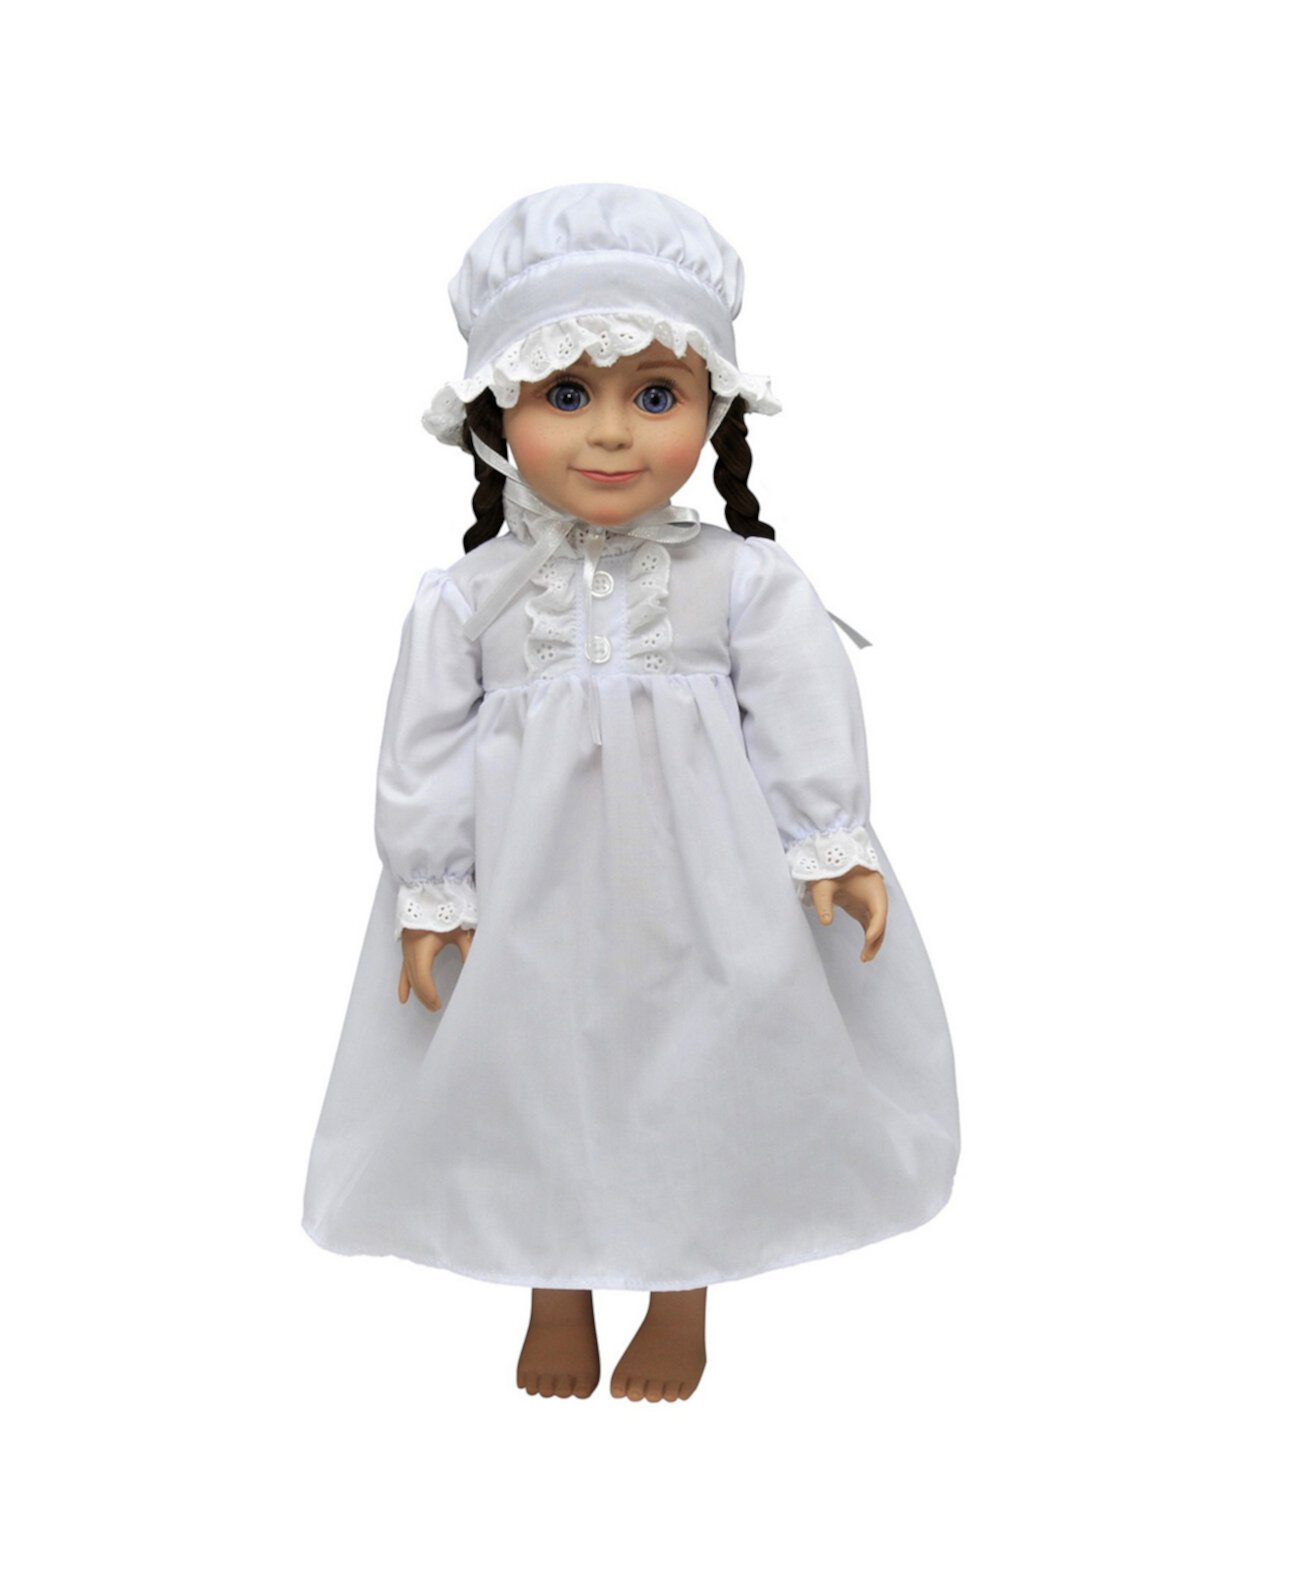 Little House on the Prairie 18-дюймовая кукольная одежда Хлопковое ночное платье Pj's и Night Cap The Queen's Treasures